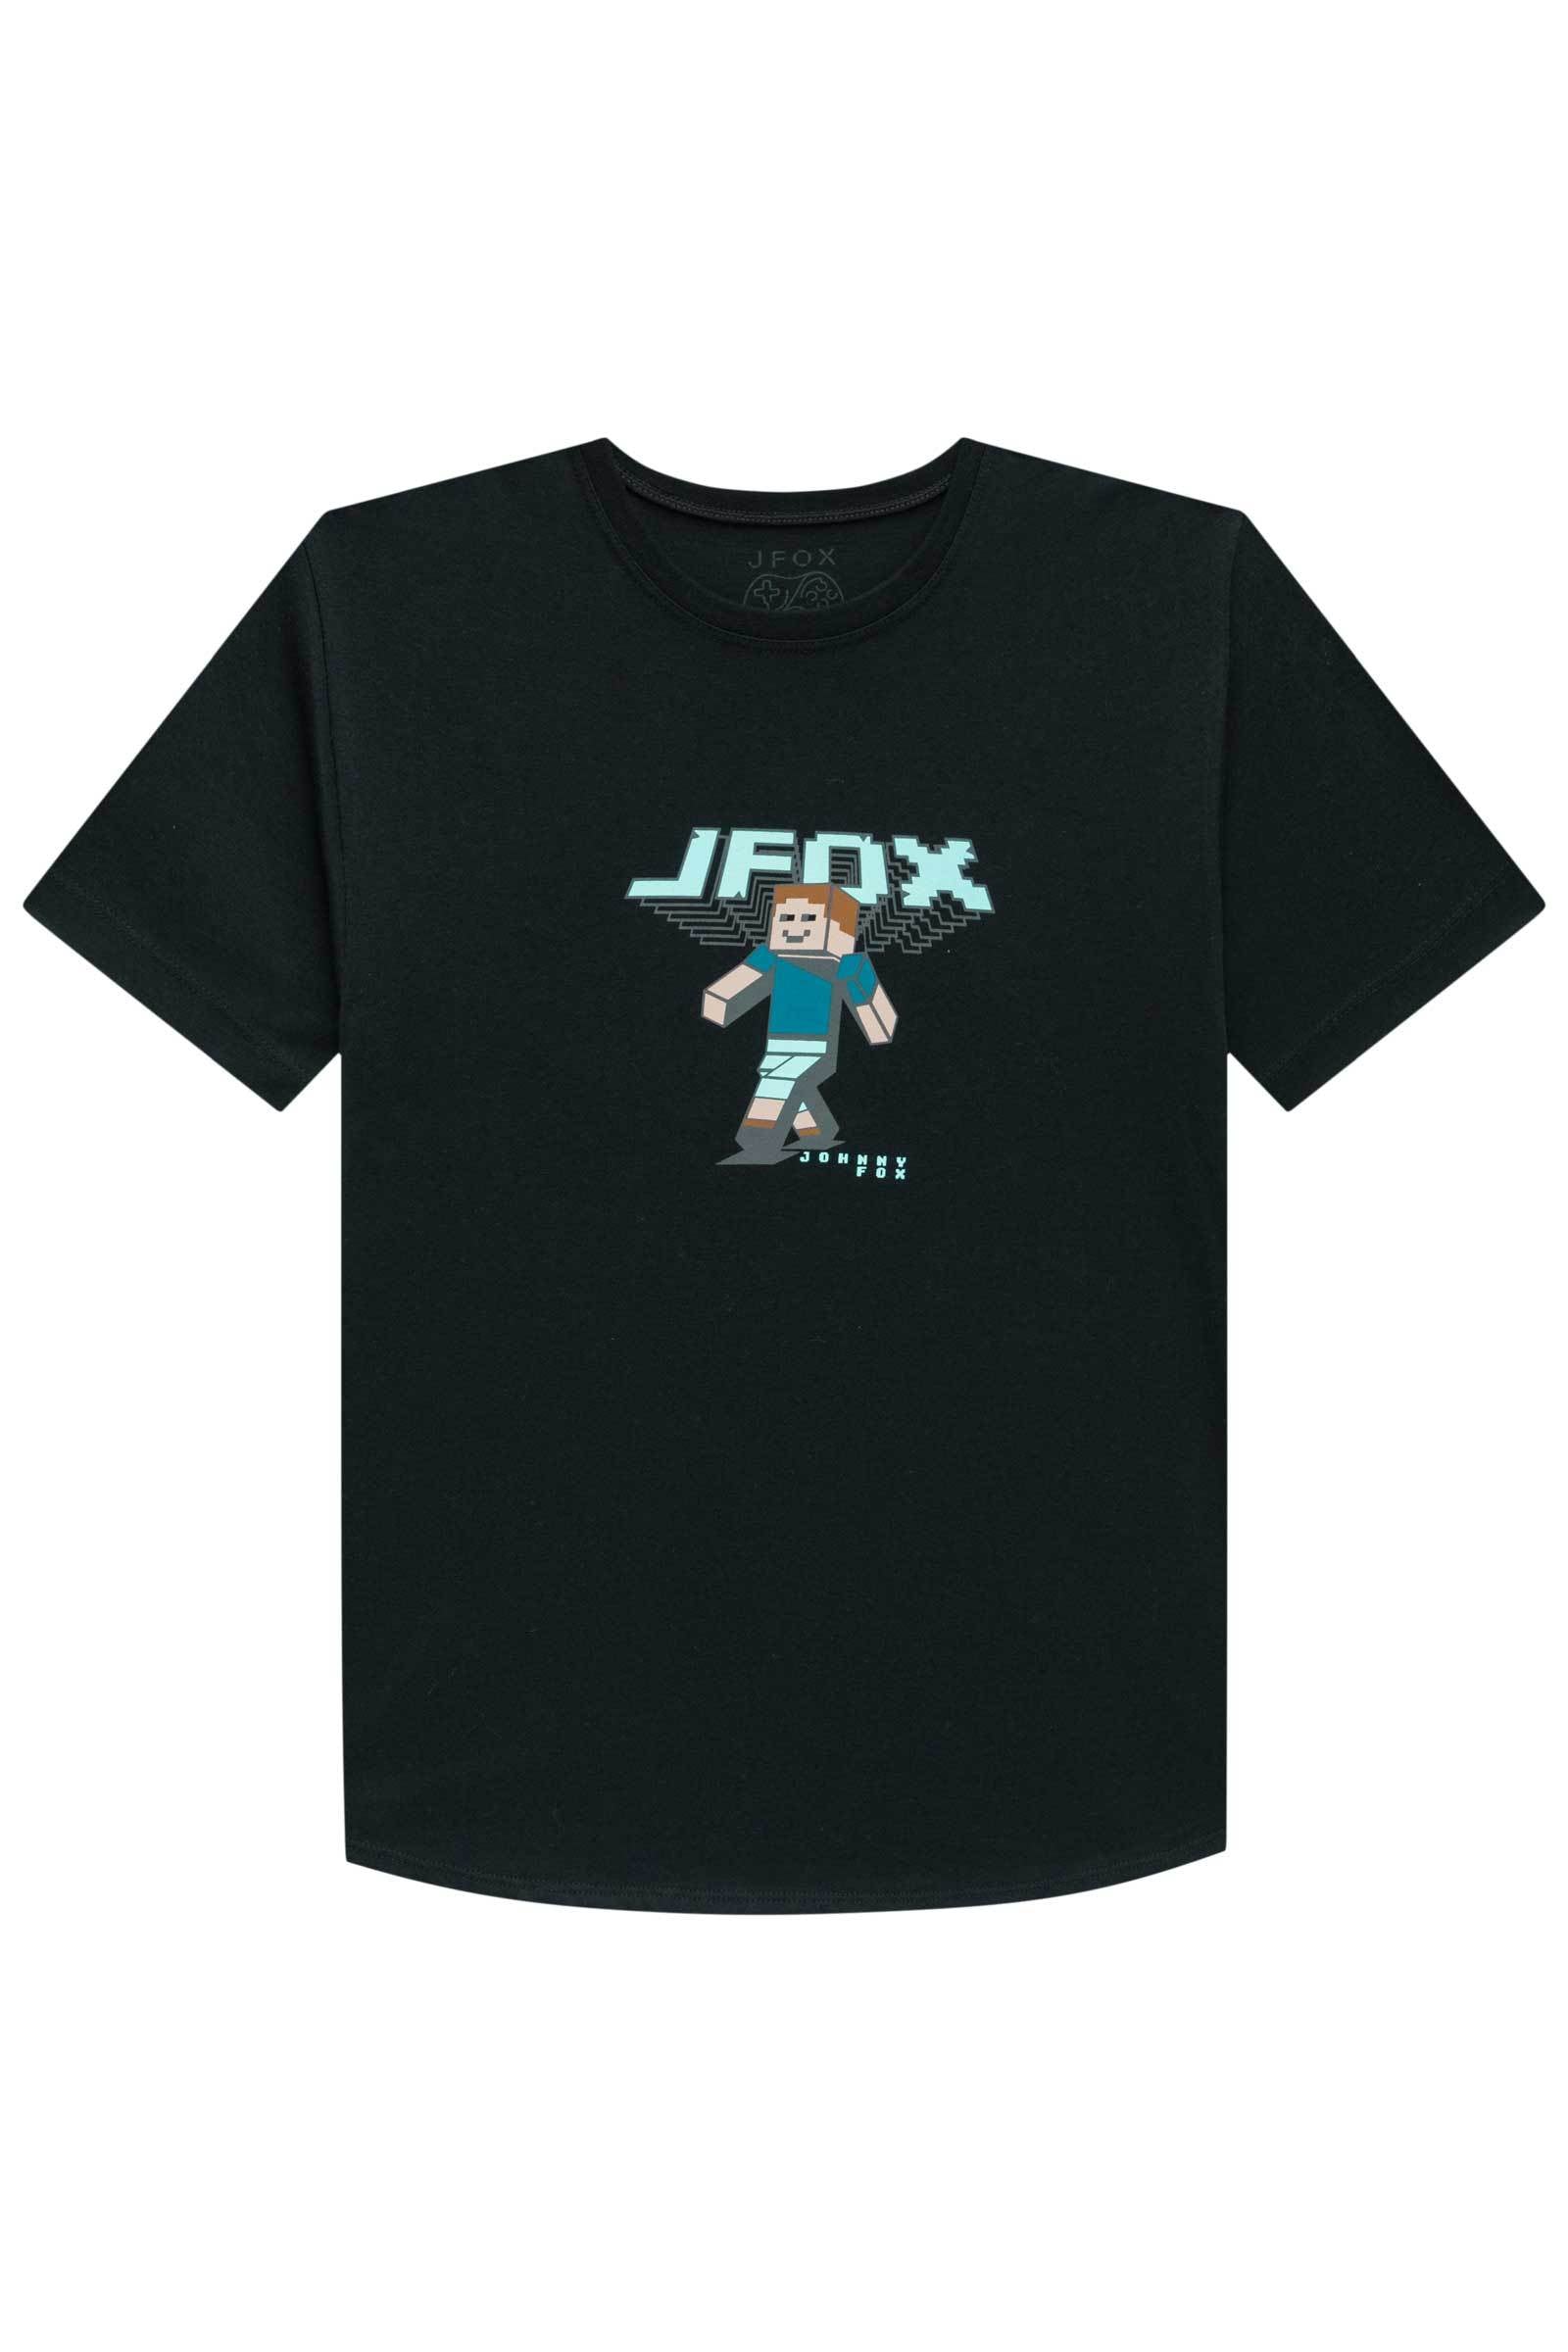 Camiseta em Meia Malha 73602 Johnny Fox